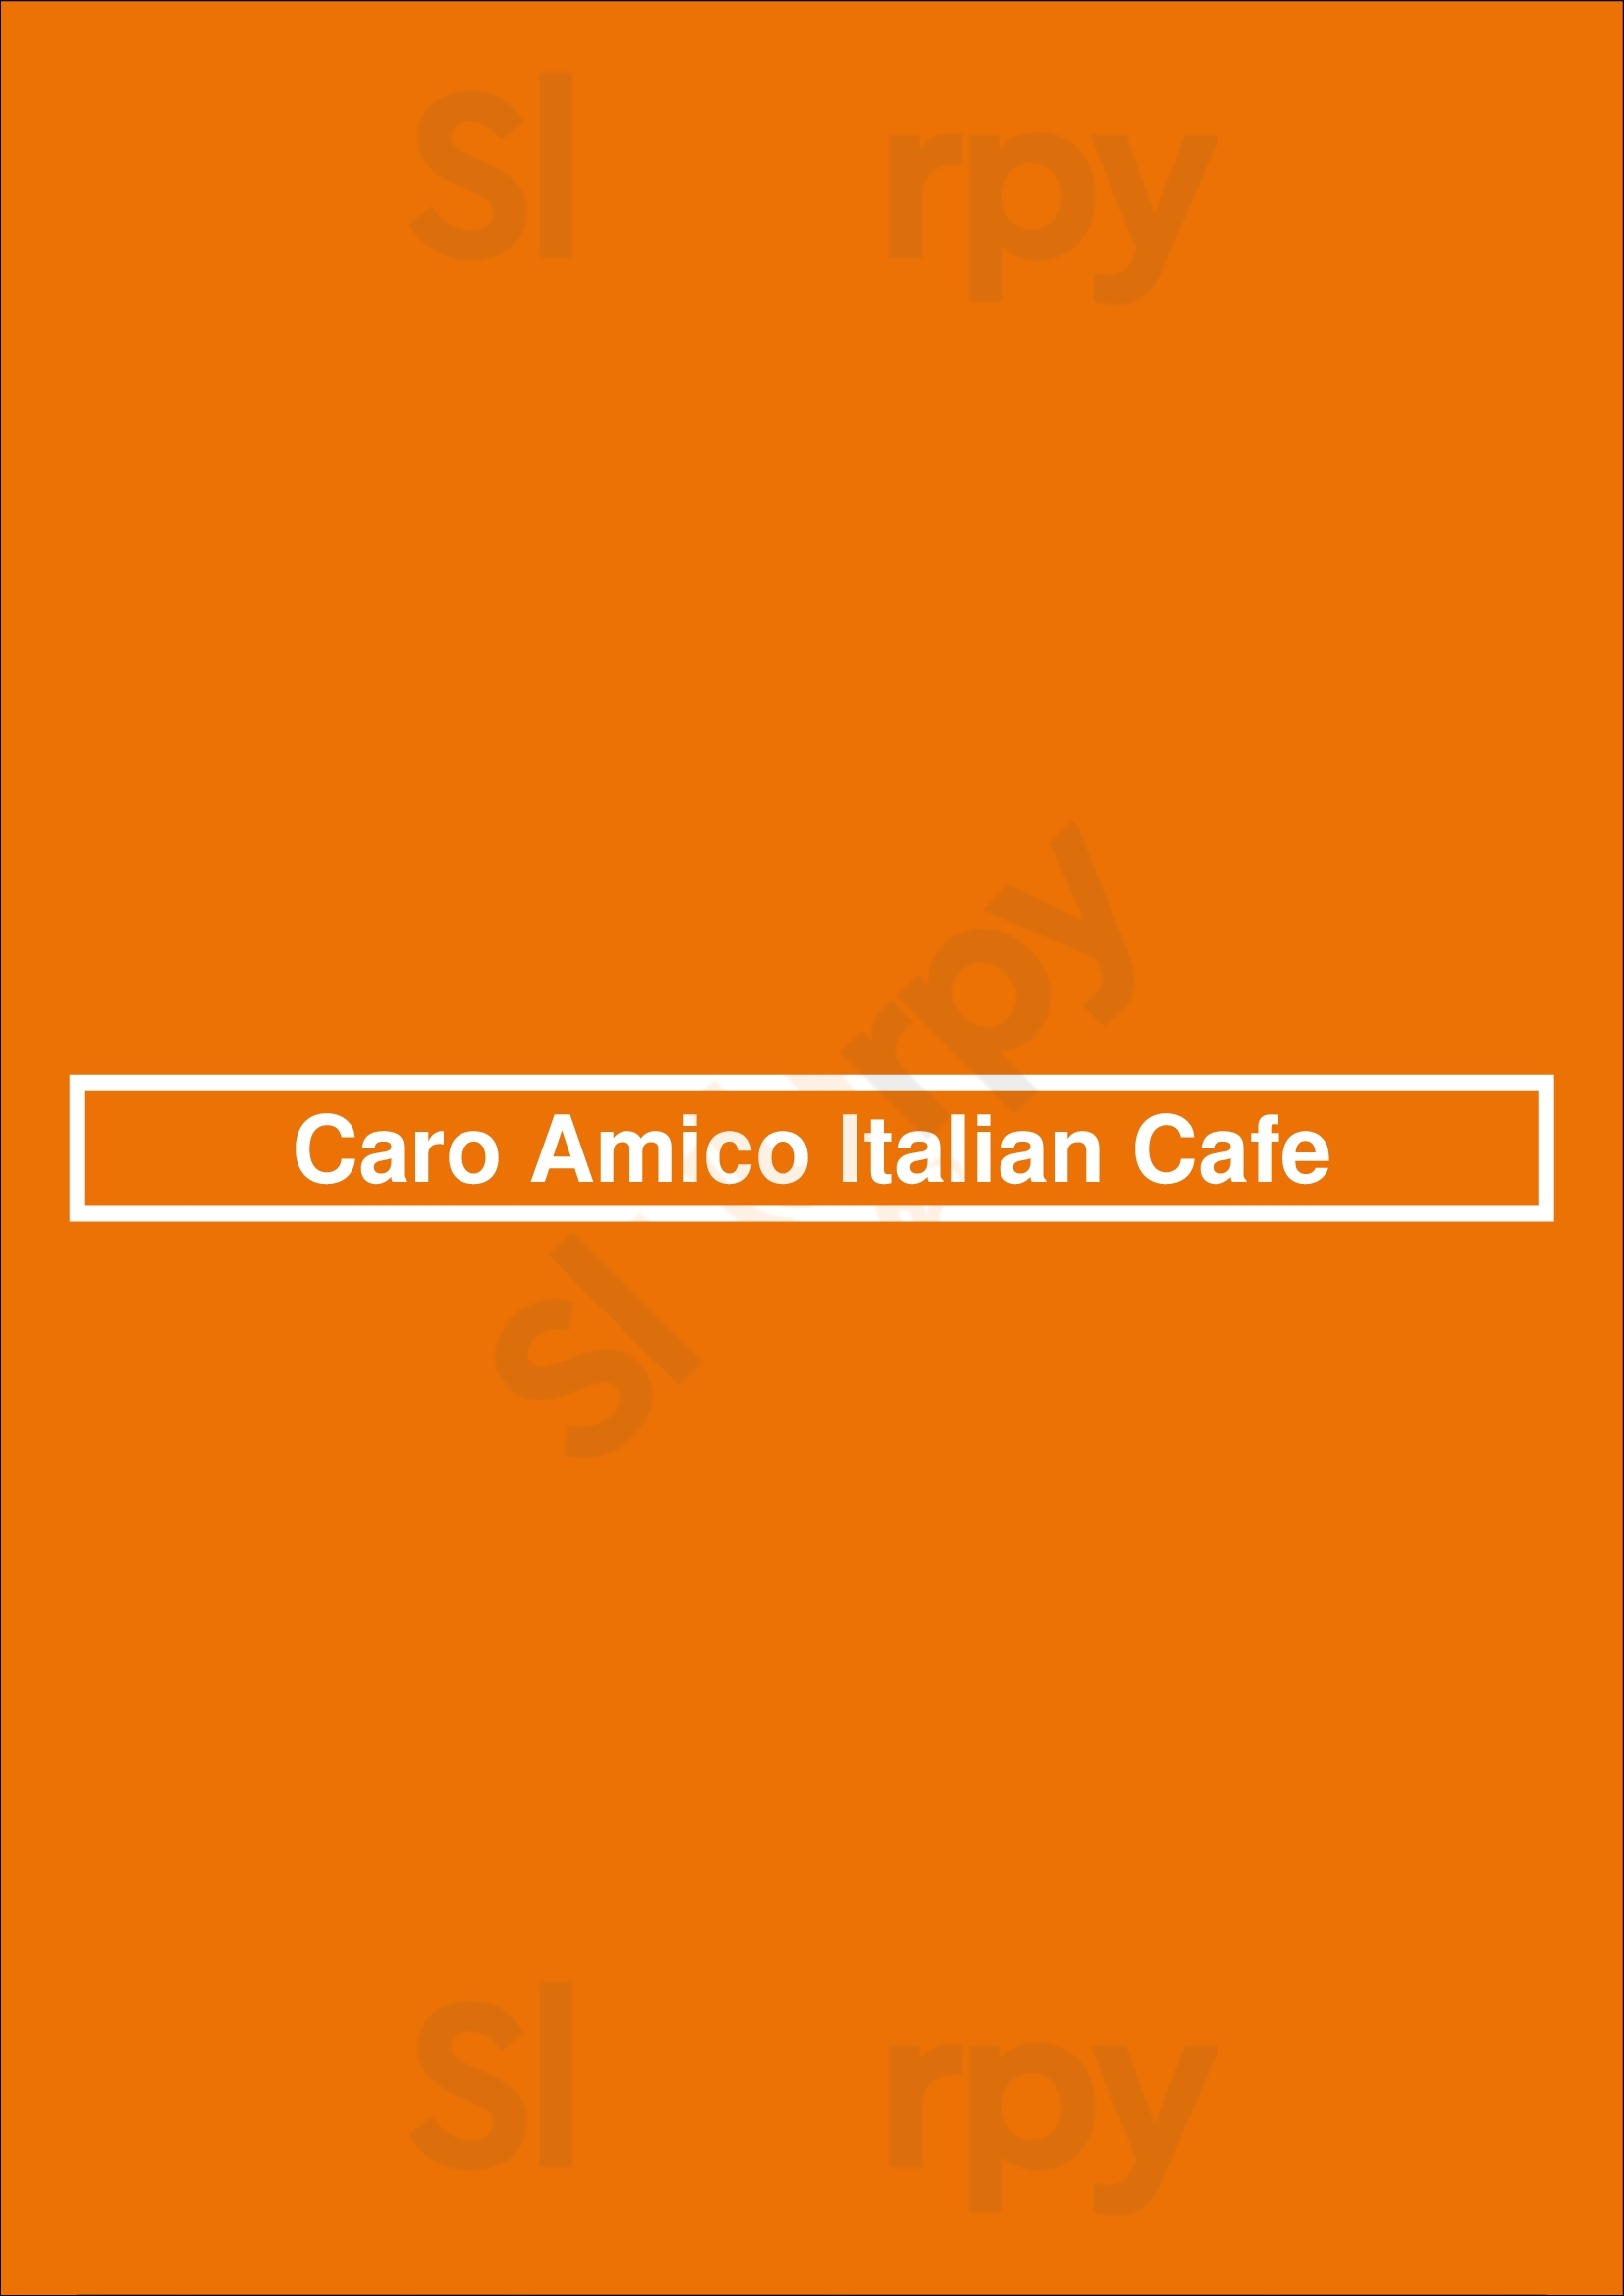 Caro Amico Italian Cafe Portland Menu - 1